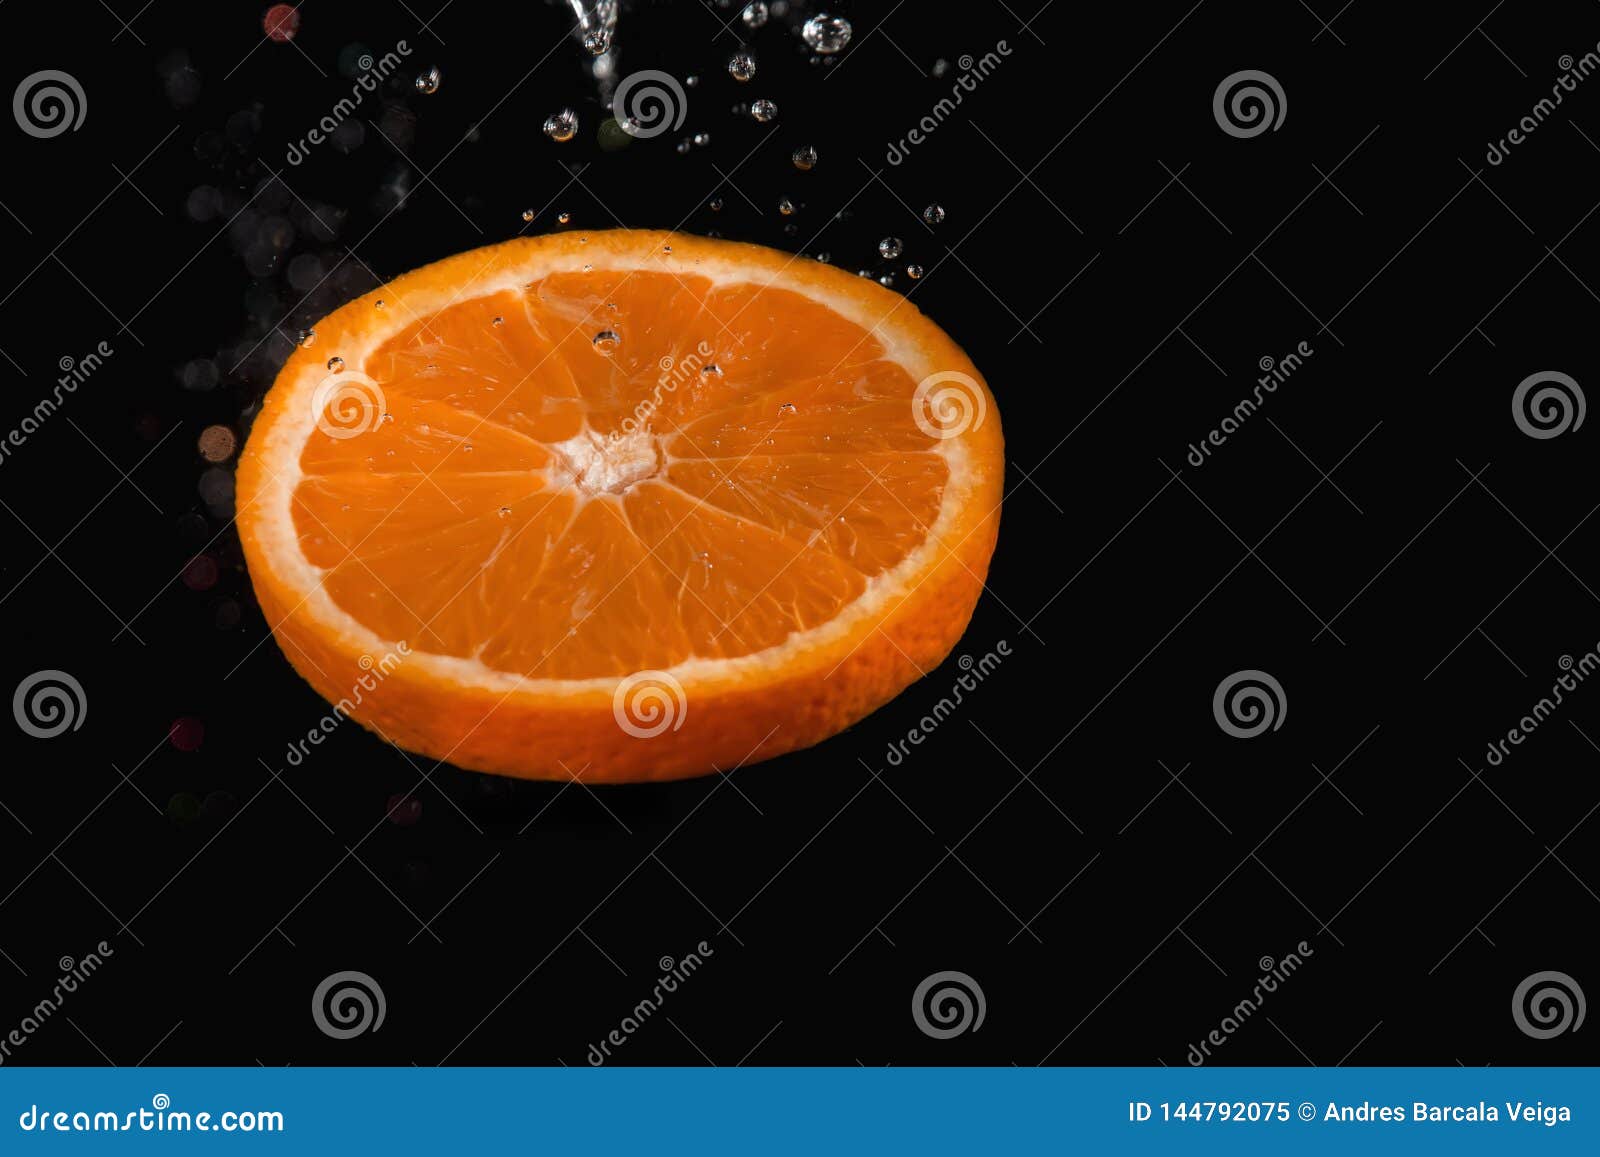 orange slice with bubbles over on black background